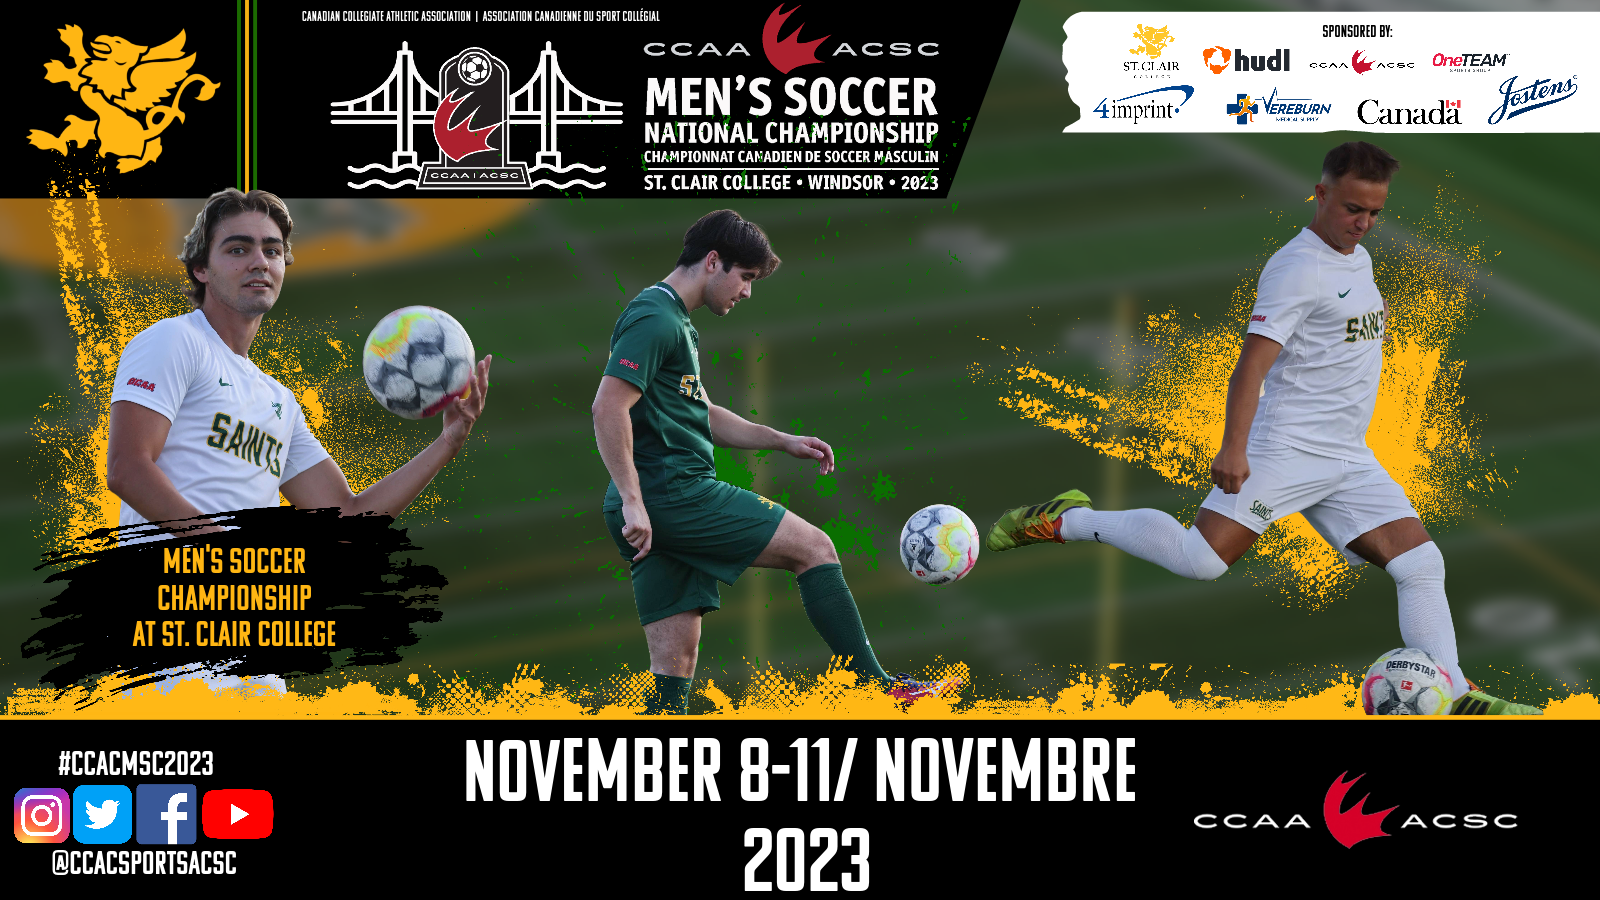 Men's Soccer to Host CCAA National Championship Nov 8-11